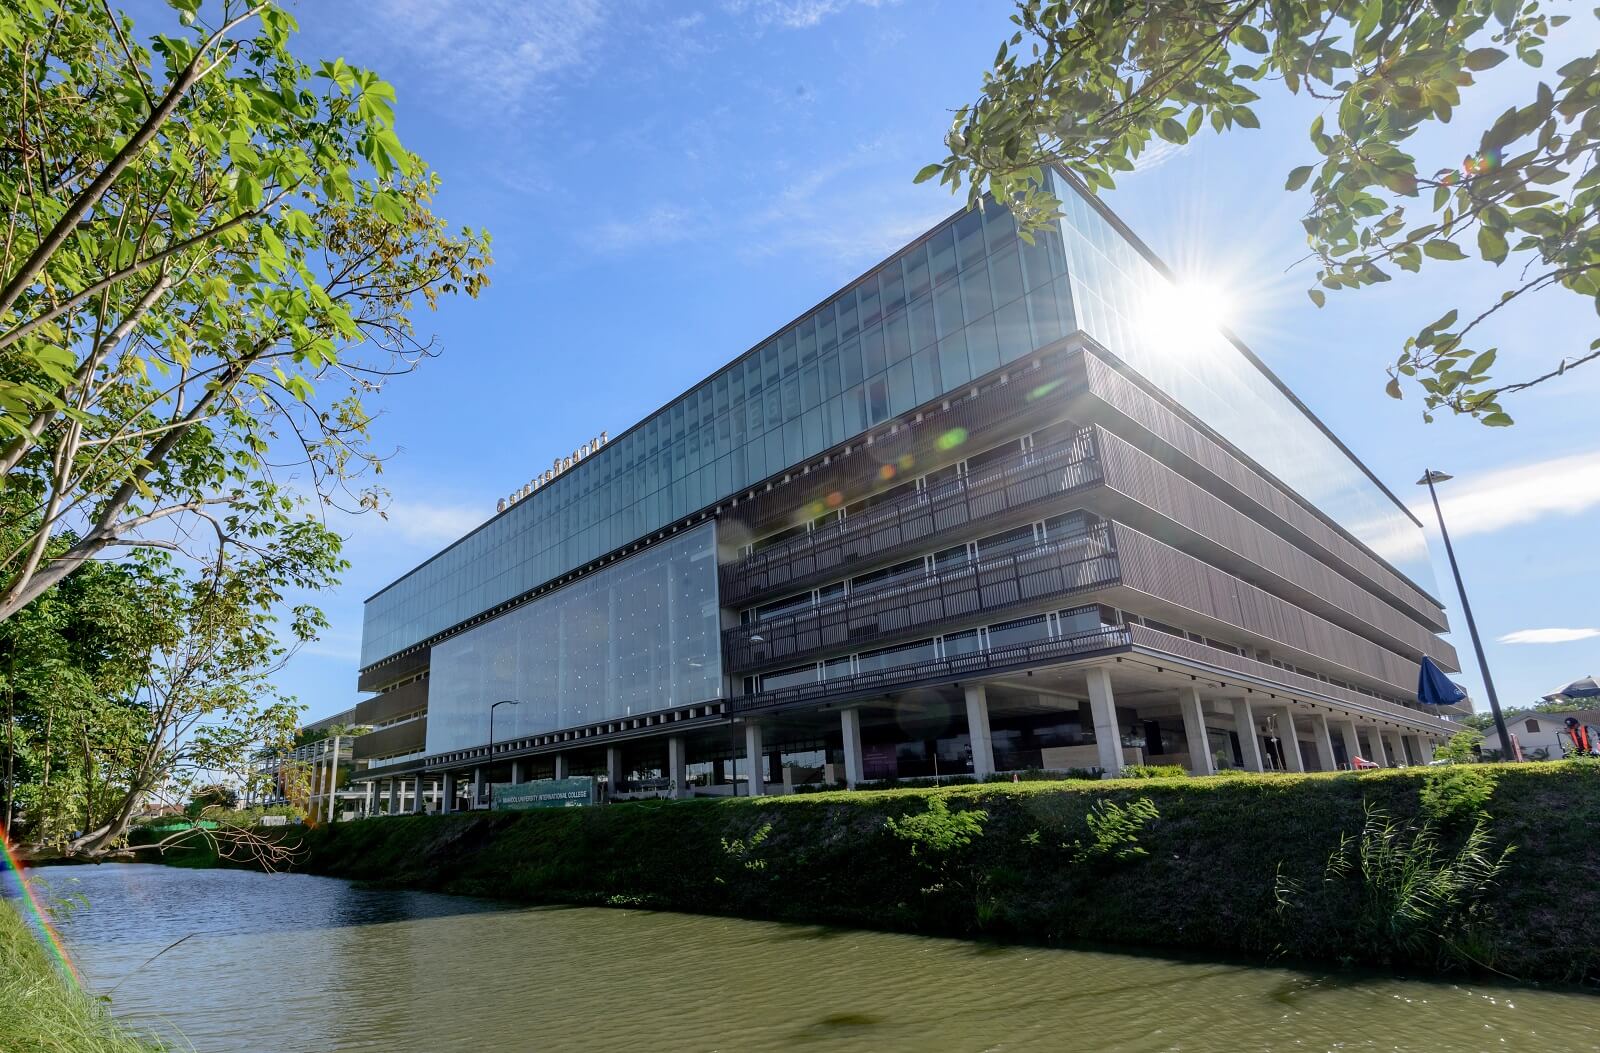 Mahidol University International College